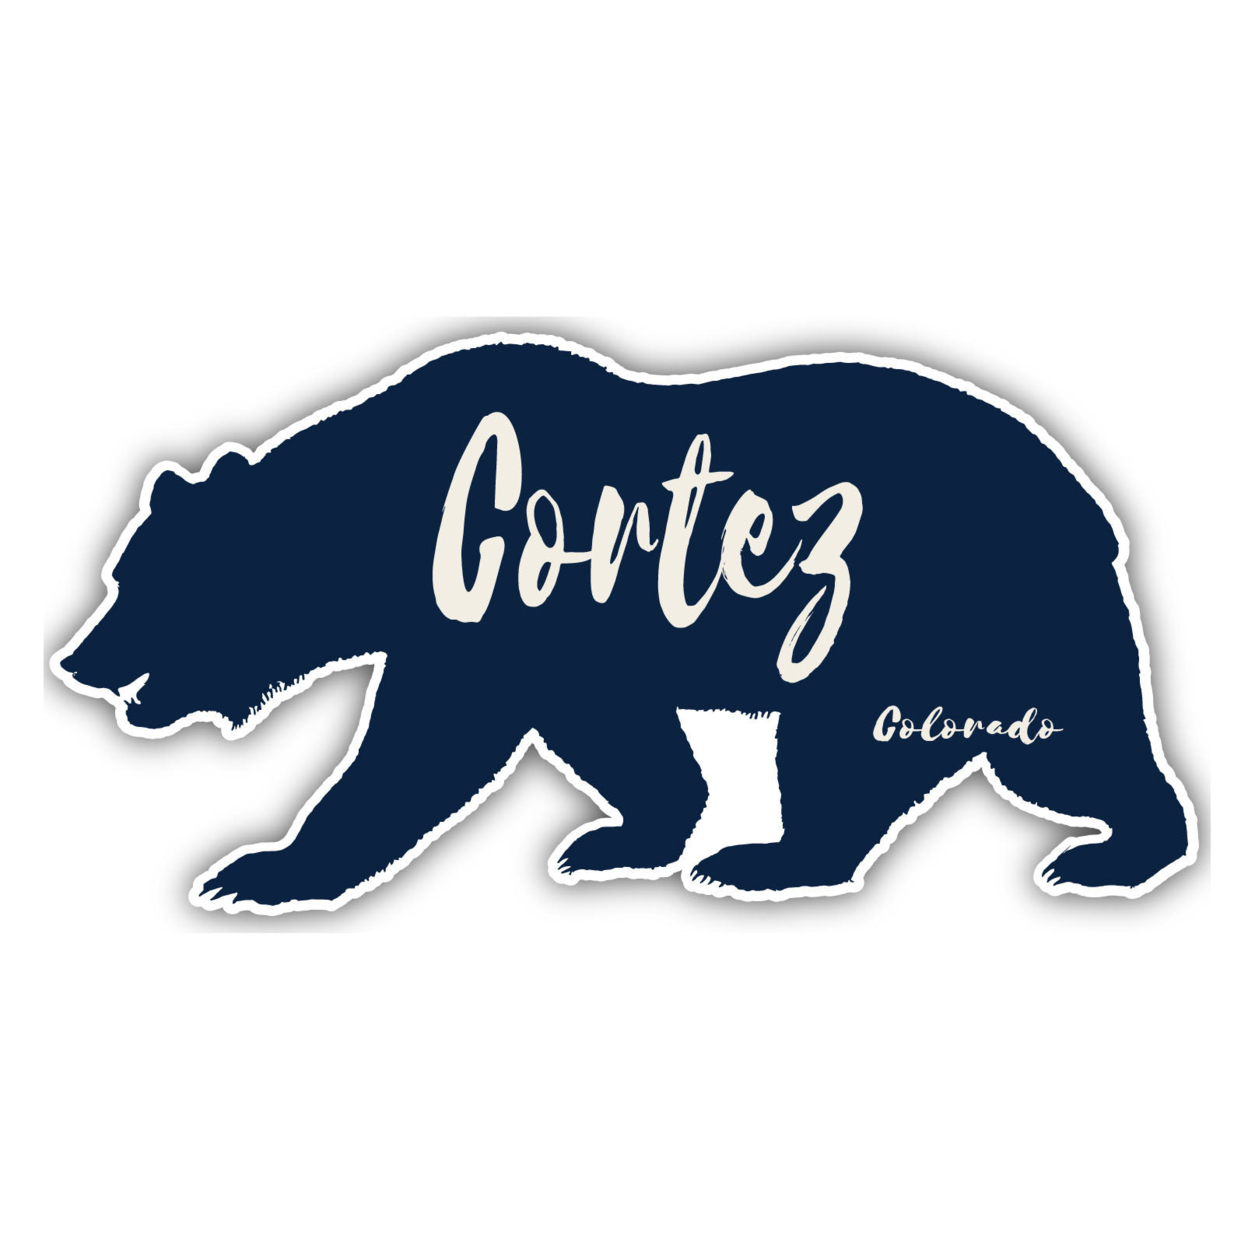 Cortez Colorado Souvenir Decorative Stickers (Choose Theme And Size) - 4-Pack, 10-Inch, Bear